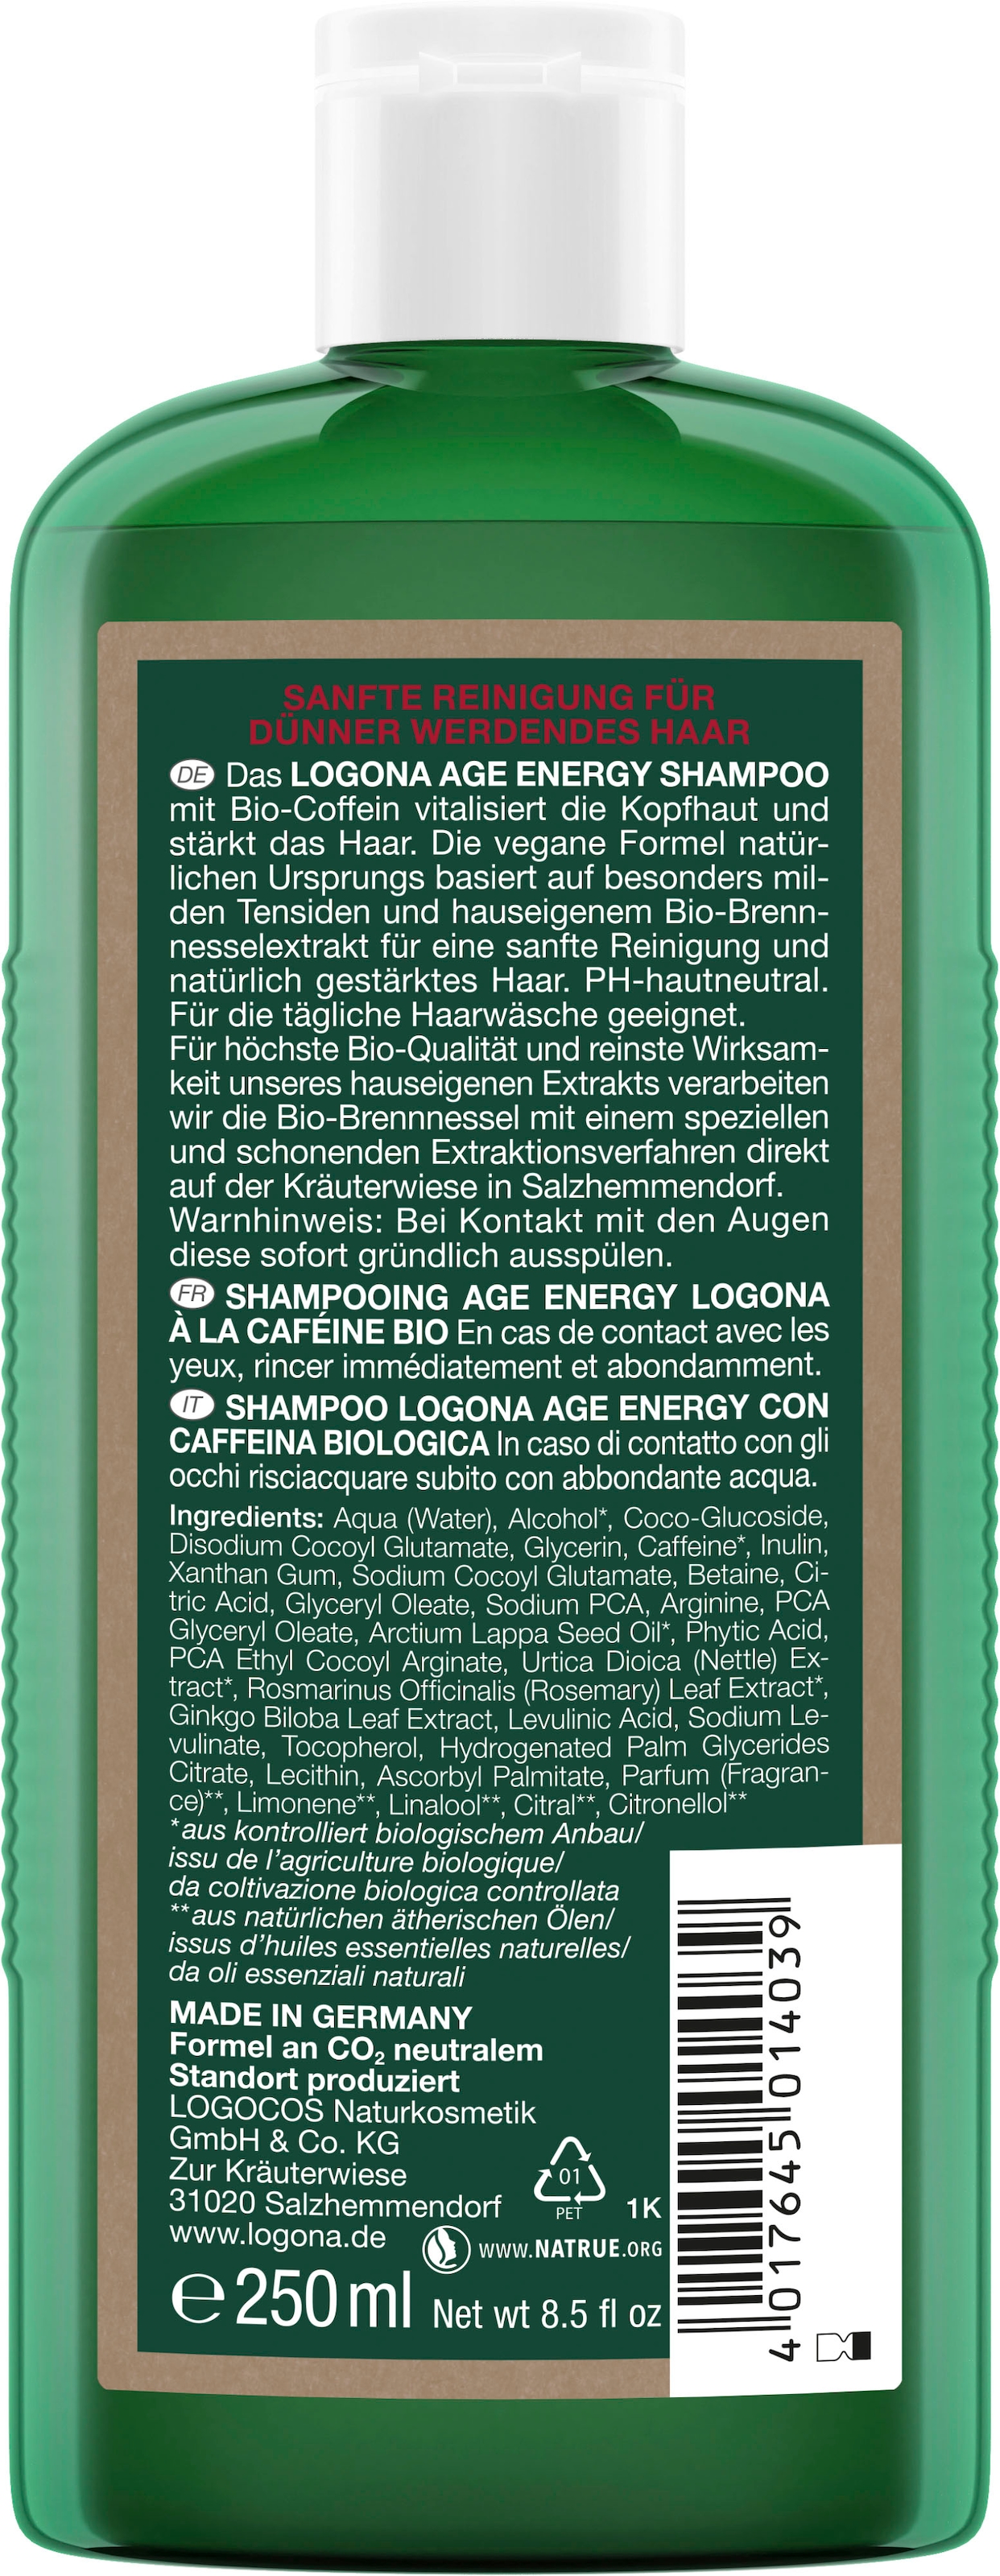 LOGONA Haarshampoo »Logona Age Energy Shampoo Bio-Coffein« bei OTTOversand